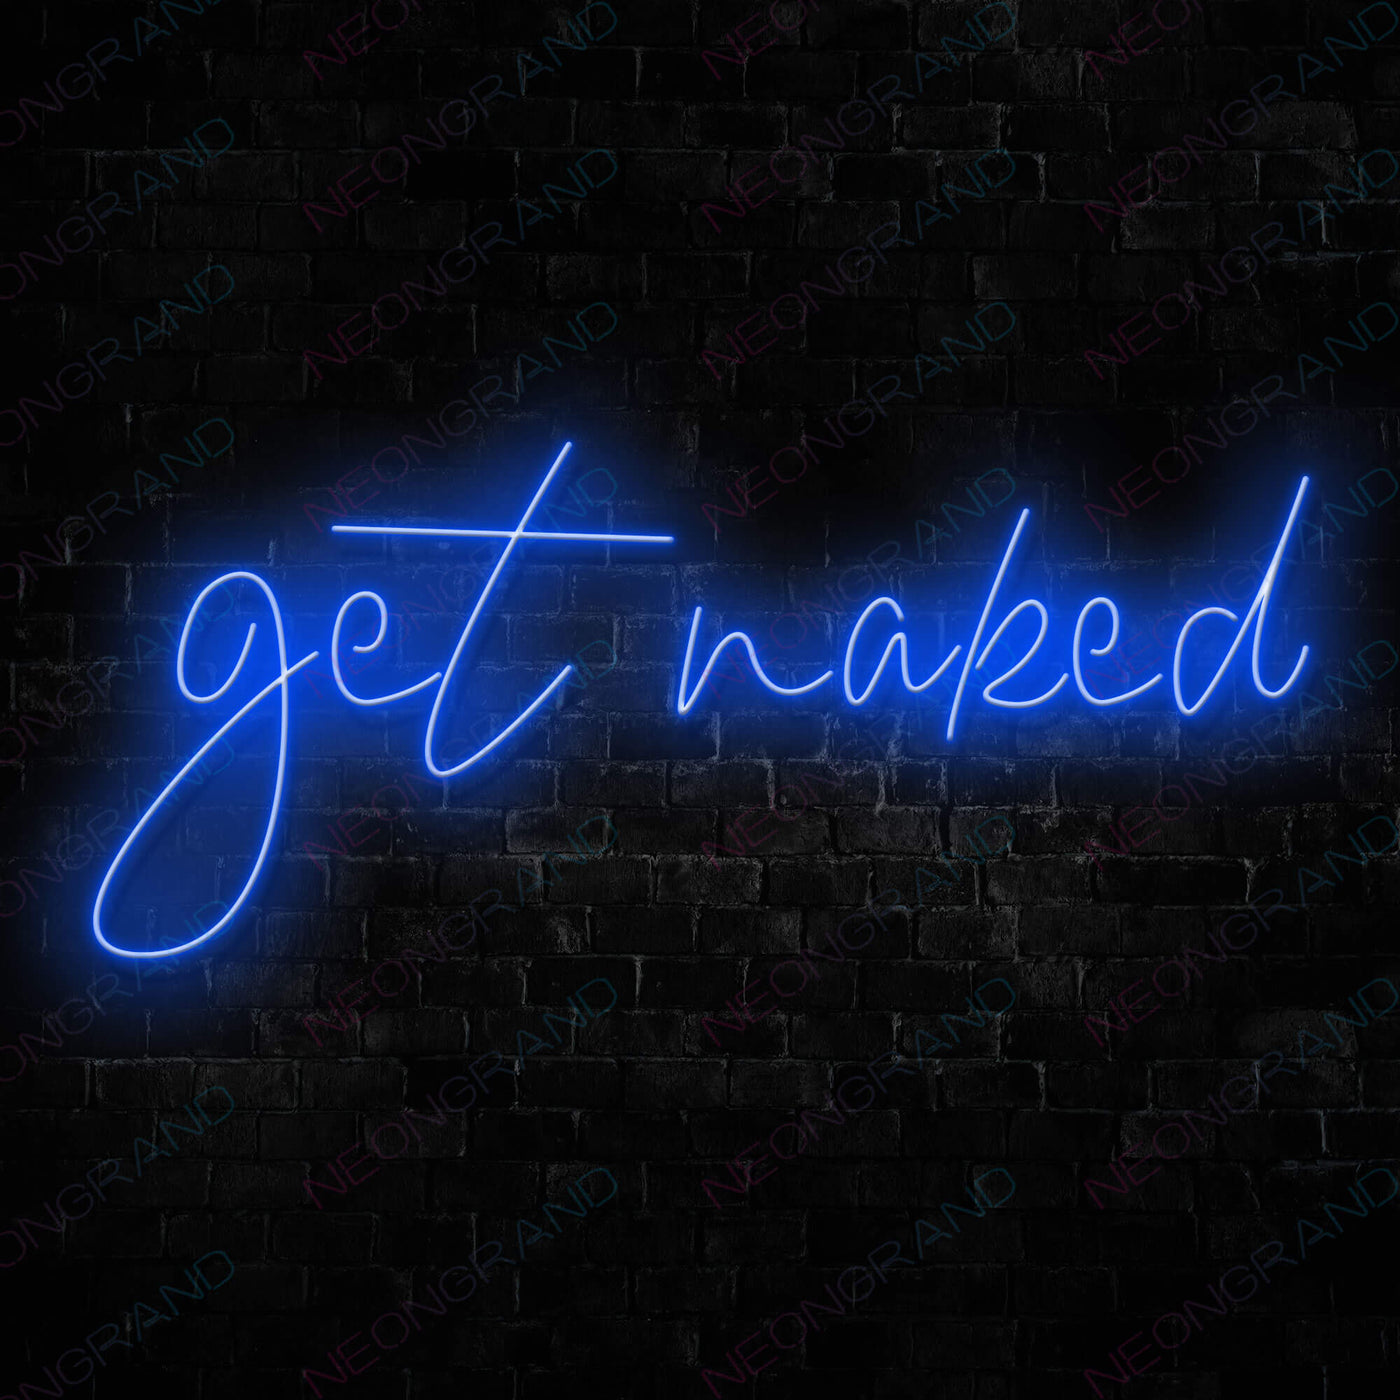 Get Naked Neon Sign blue